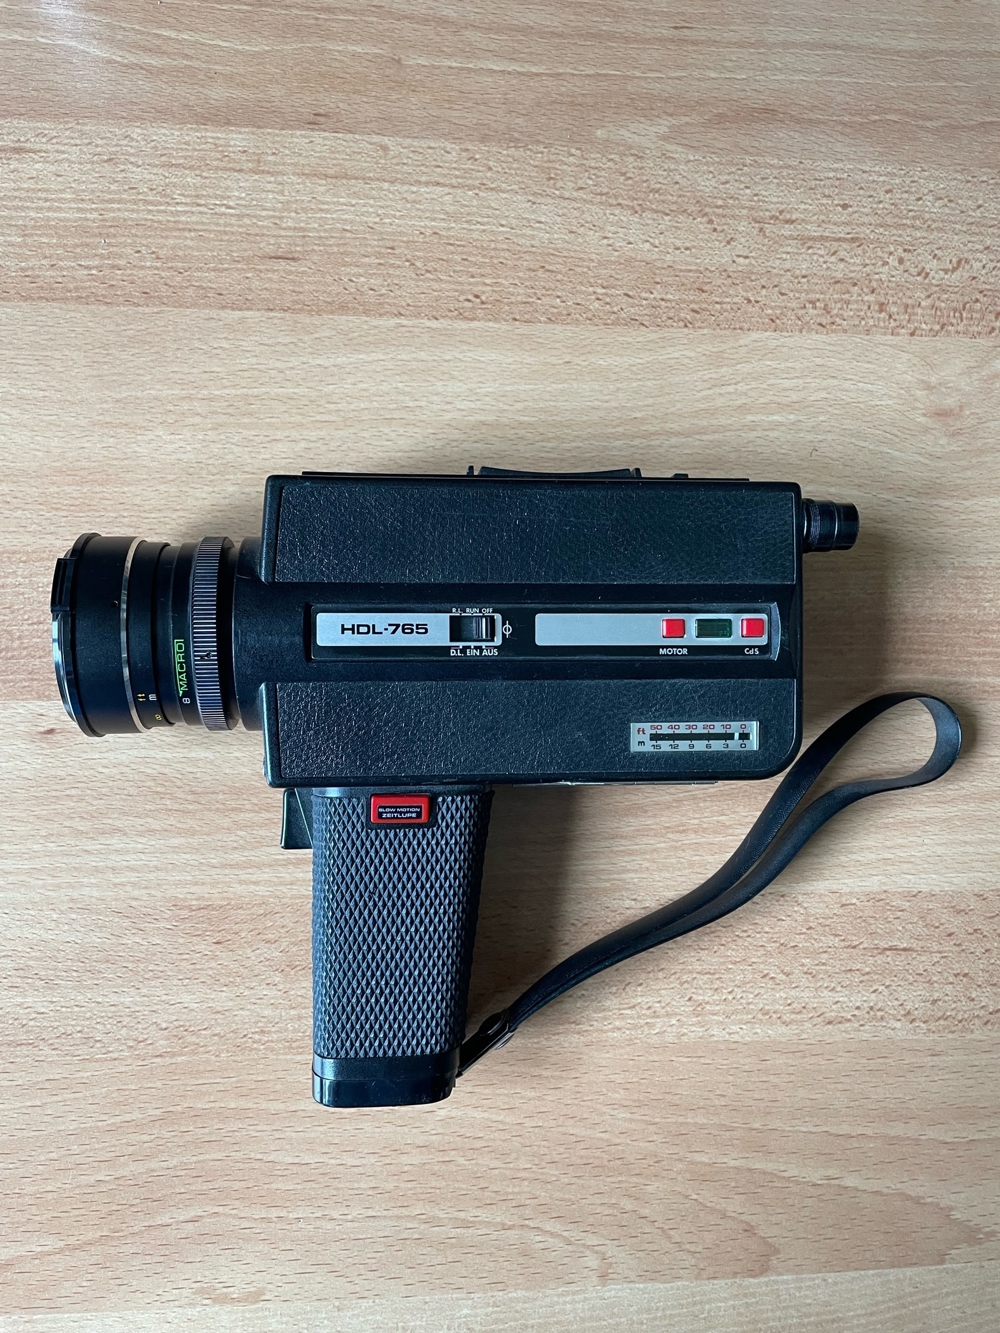 Cosina makro HDL 765 Super 8 Kamera 